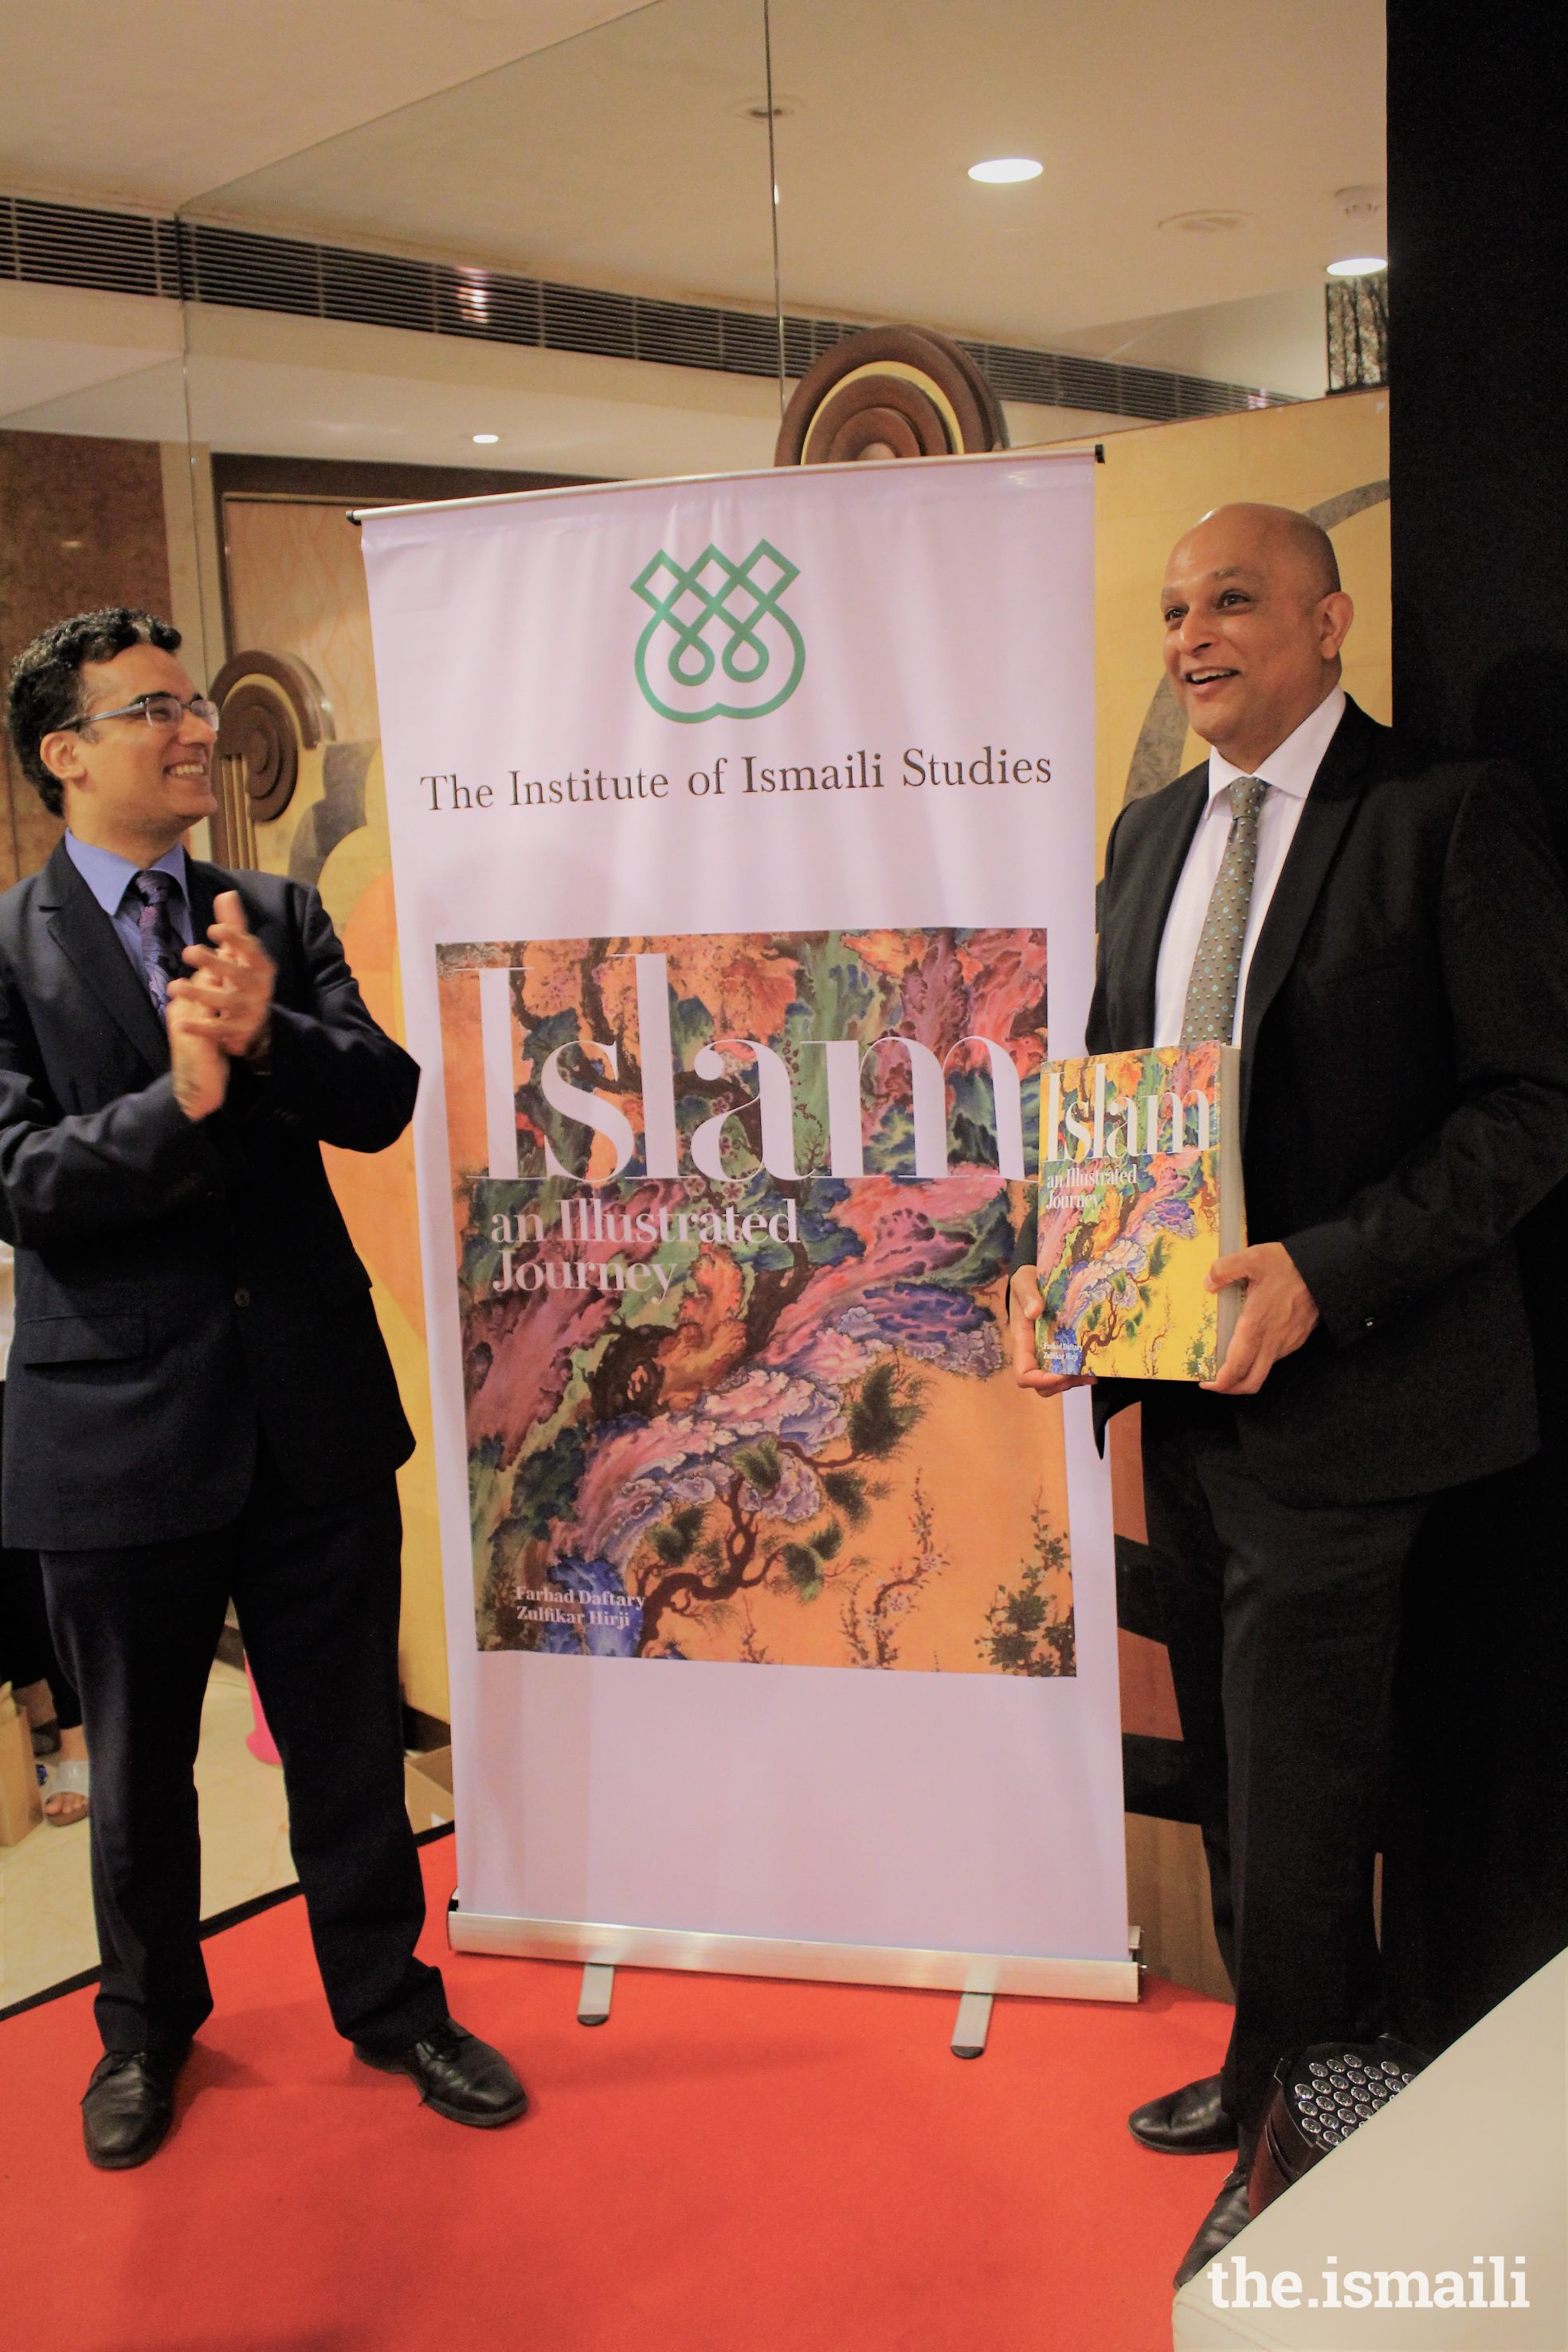 Professor Zulfikar Hirji, co author presents the book whilst Mr. Ashish Merchant, President, Council for India looks on